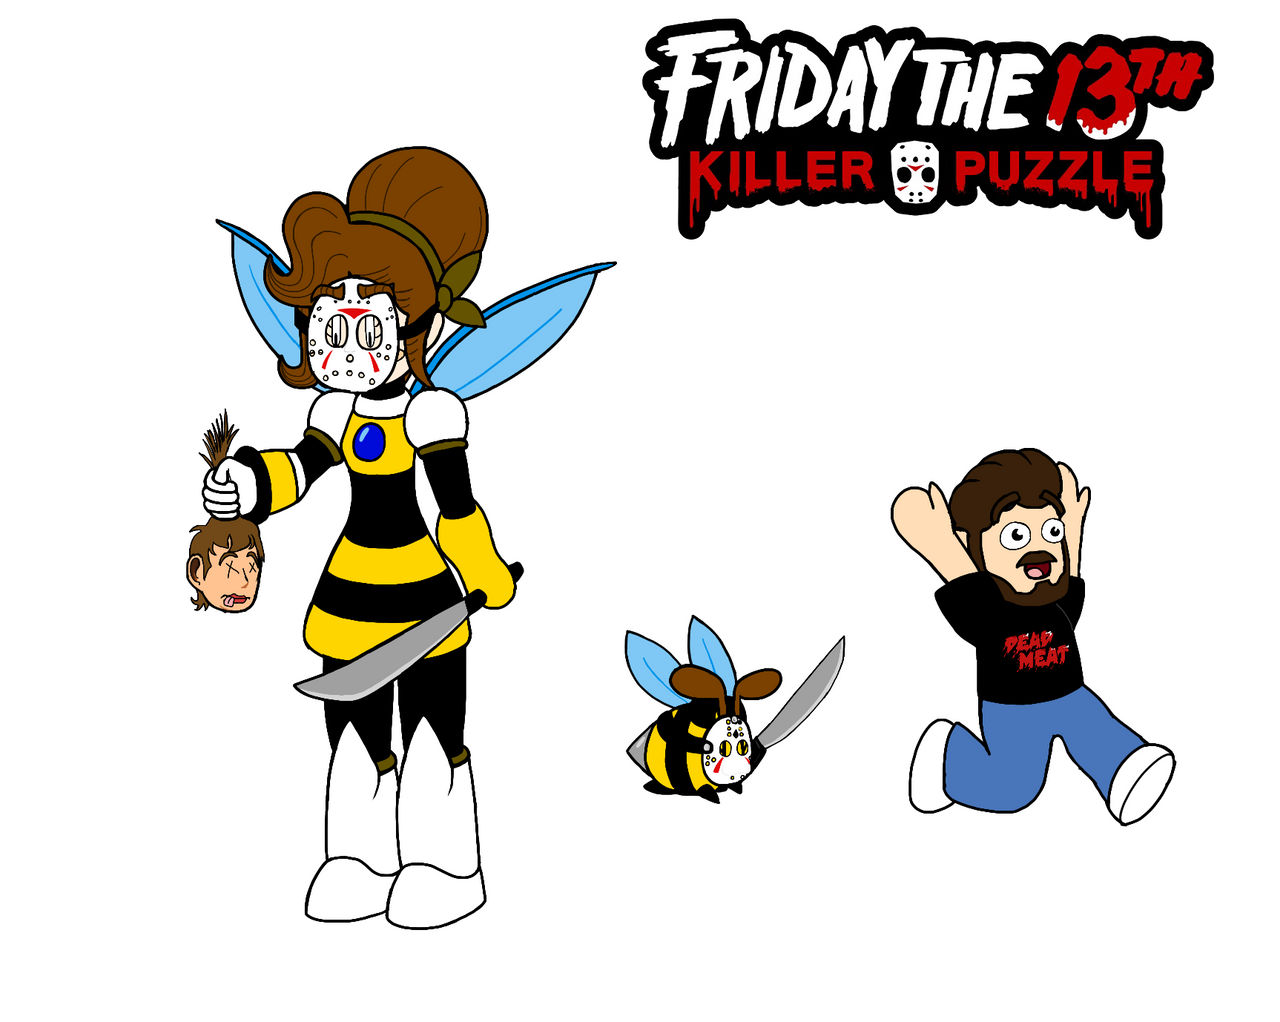 Honey Woman reviews Friday the 13th killer puzzle by AskHoneyWoman on  DeviantArt